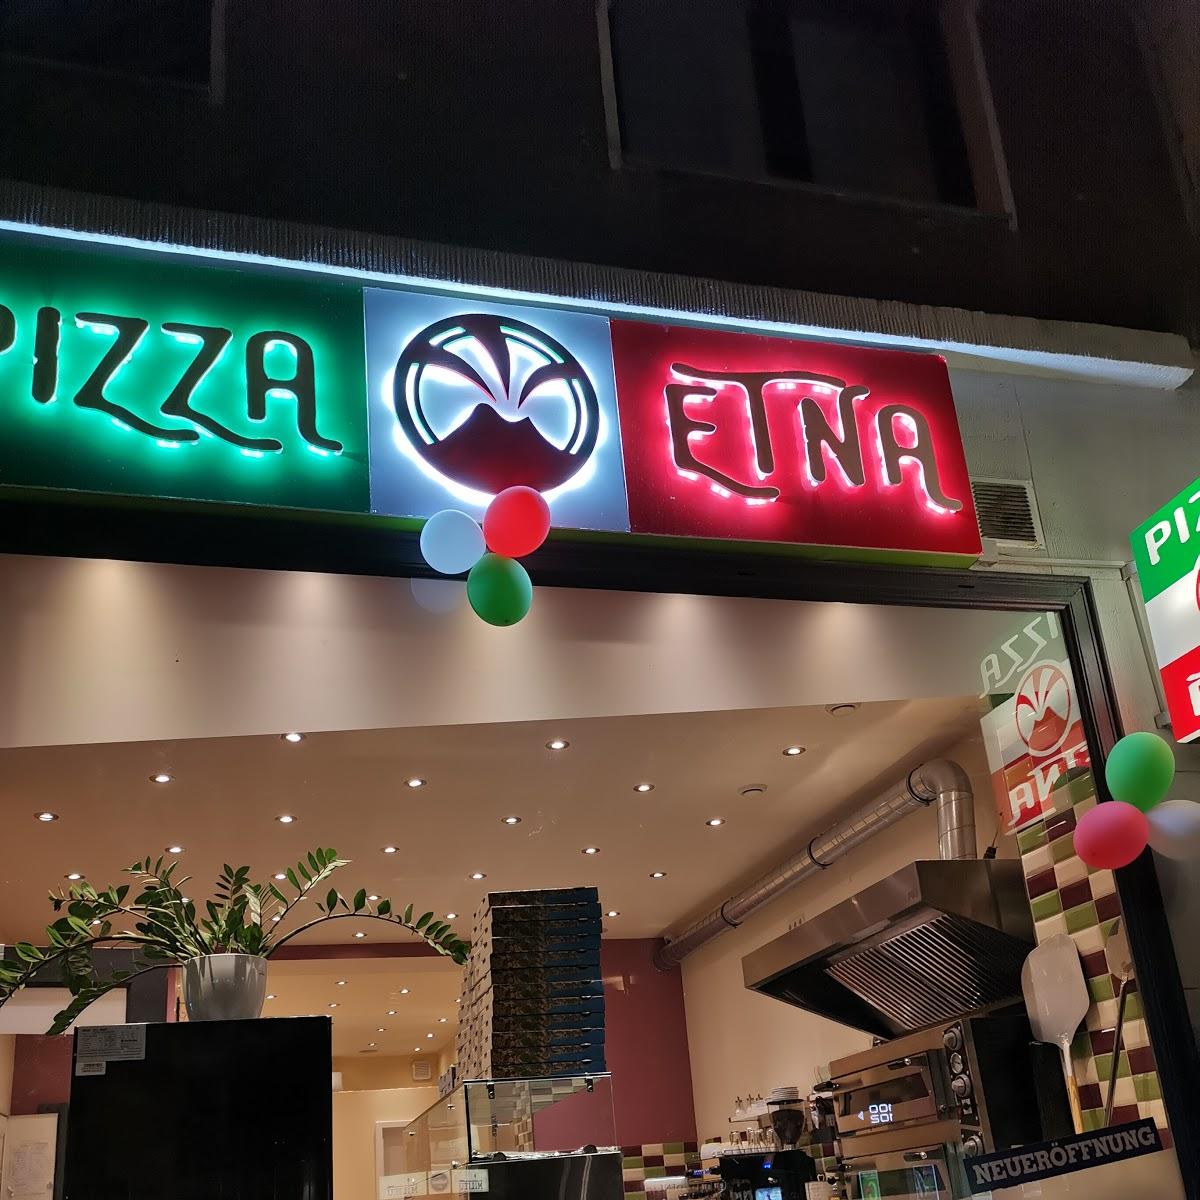 Restaurant "Pizzeria Etna" in Düsseldorf